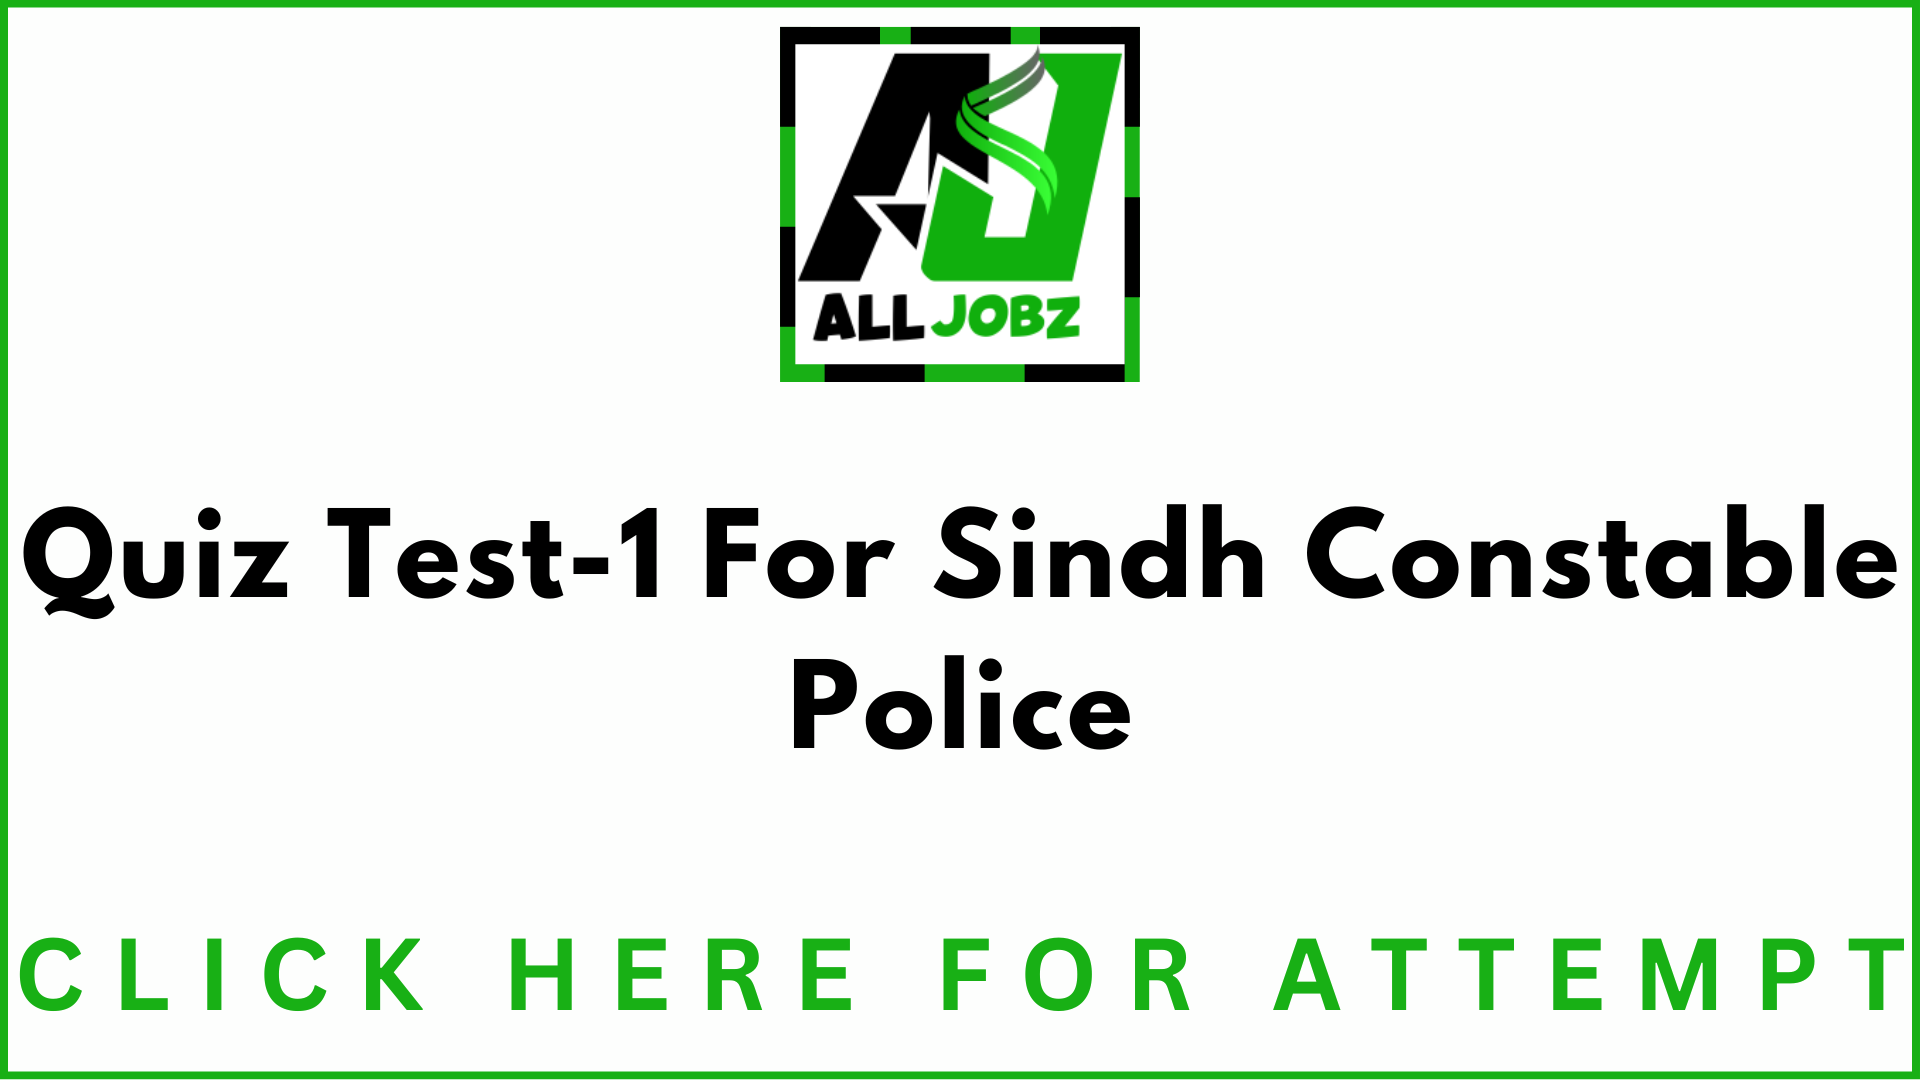 Sindh Police Constable Quiz, Quiz Test-1 For Sindh Constable Police, Sindh Police Written Test Questions Pdf, Quiz Test For Sindh Police Pdf Download, Quiz Test For Sindh Police Pdf, Quiz Test For Sindh Police Constable, Free Quiz Test For Sindh Police, Sindh Police Written Test Mcqs, Sindh Police Written Test Questions In Urdu, Sts Sindh Police Sample Paper Pdf Download,